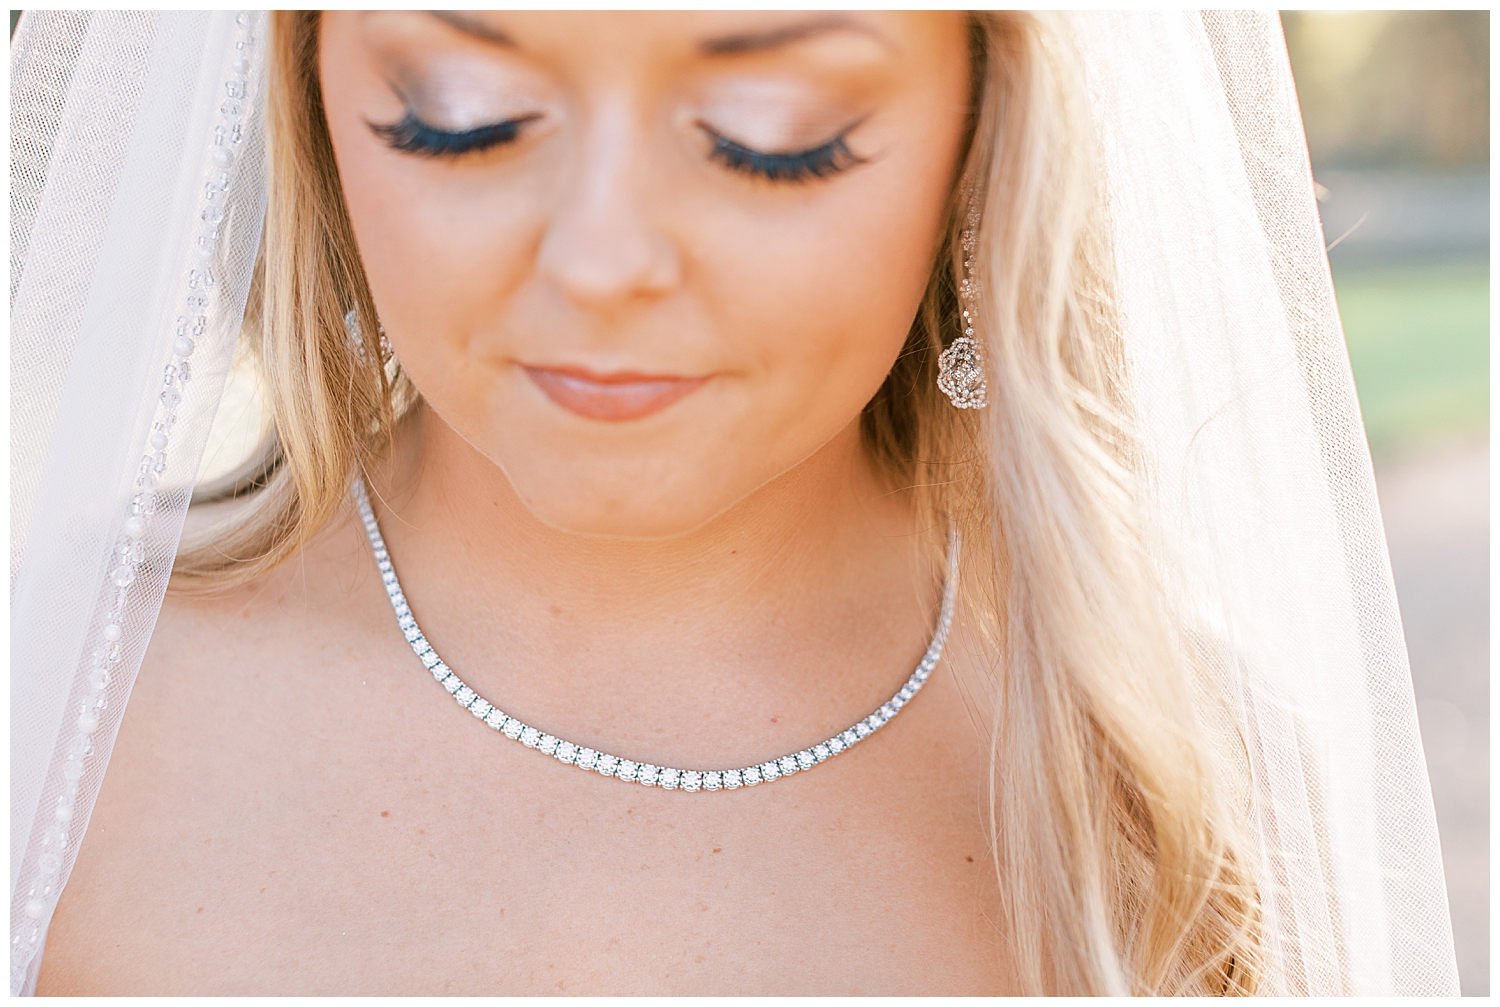 A bride wears a genuine diamond necklace.